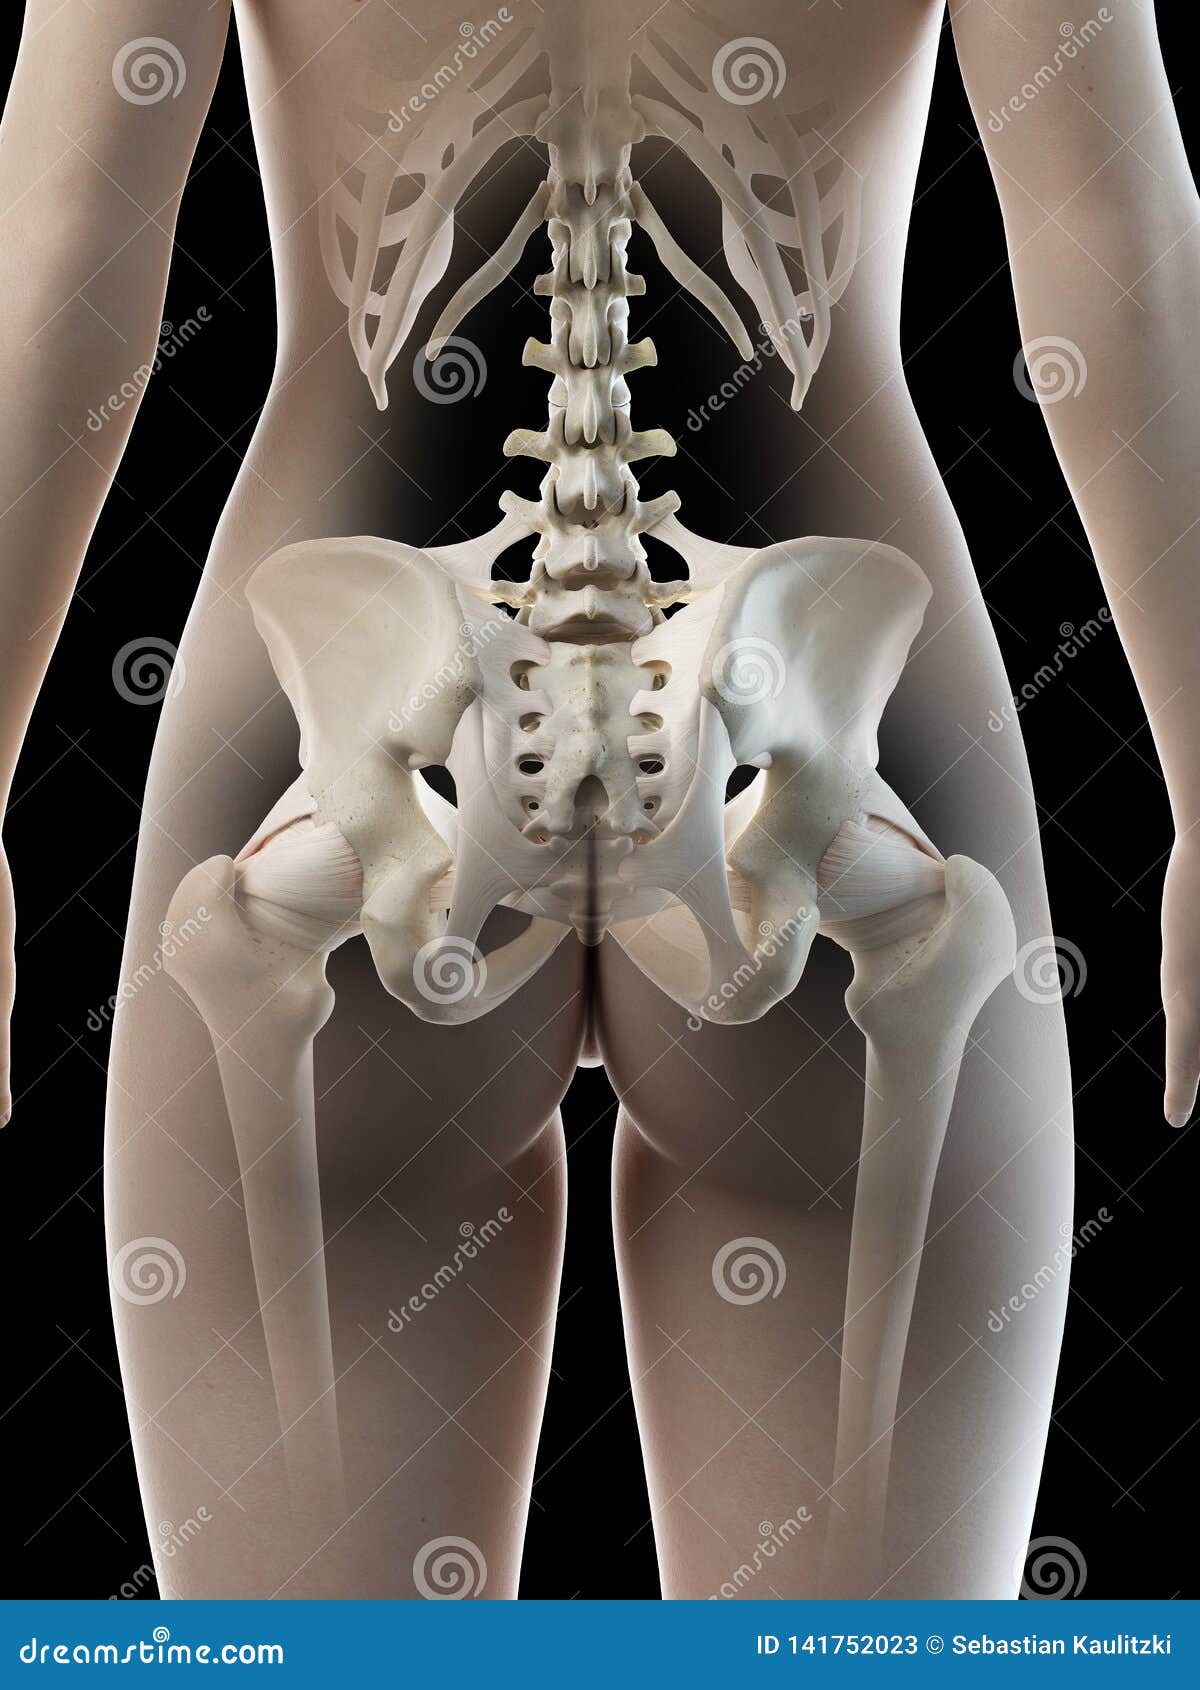 a females hip bone